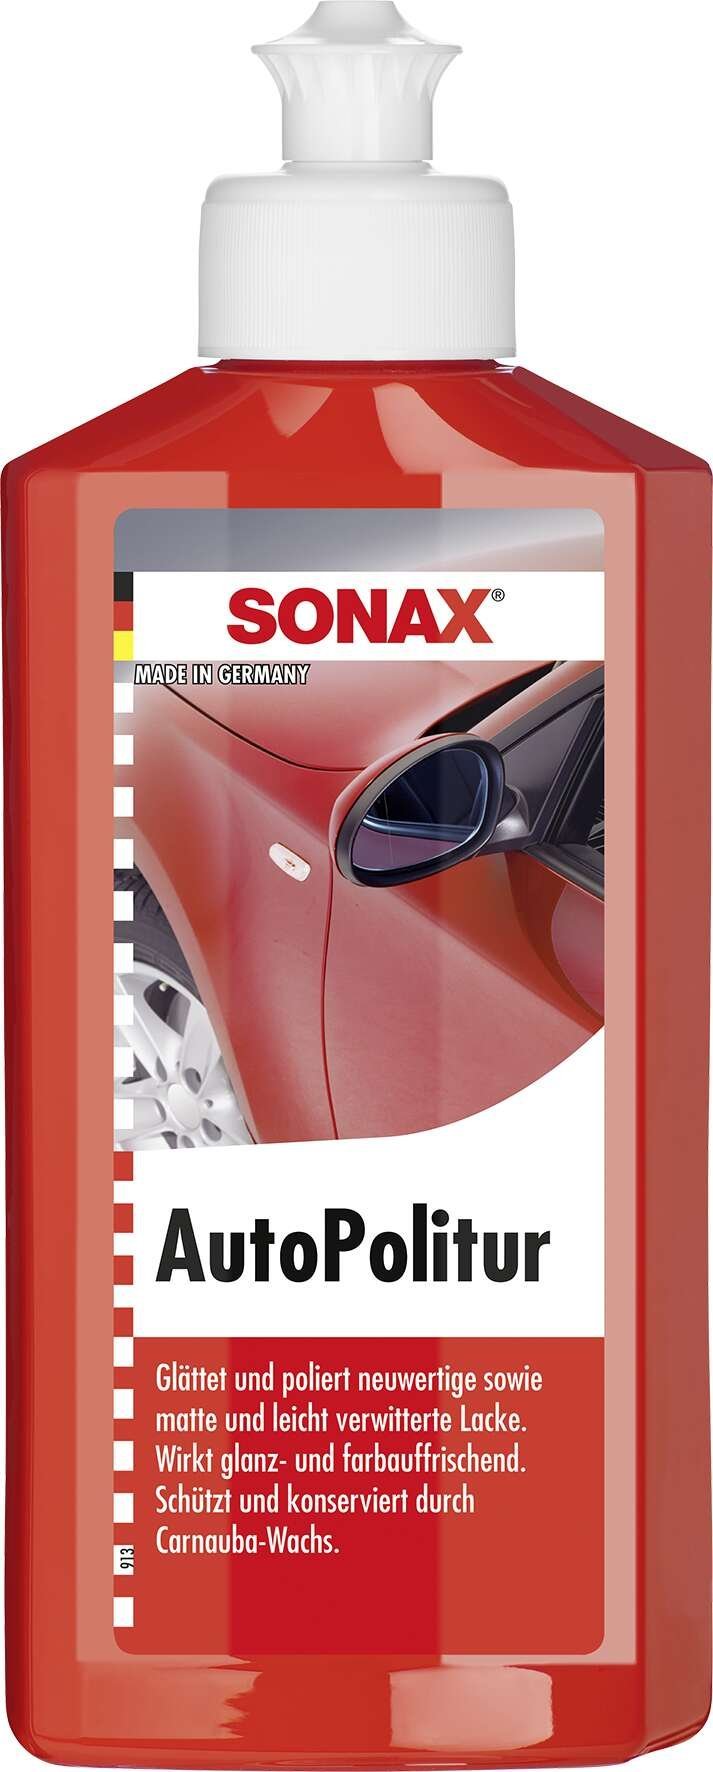 SONAX Autopolitur 250 ml Hochglanz